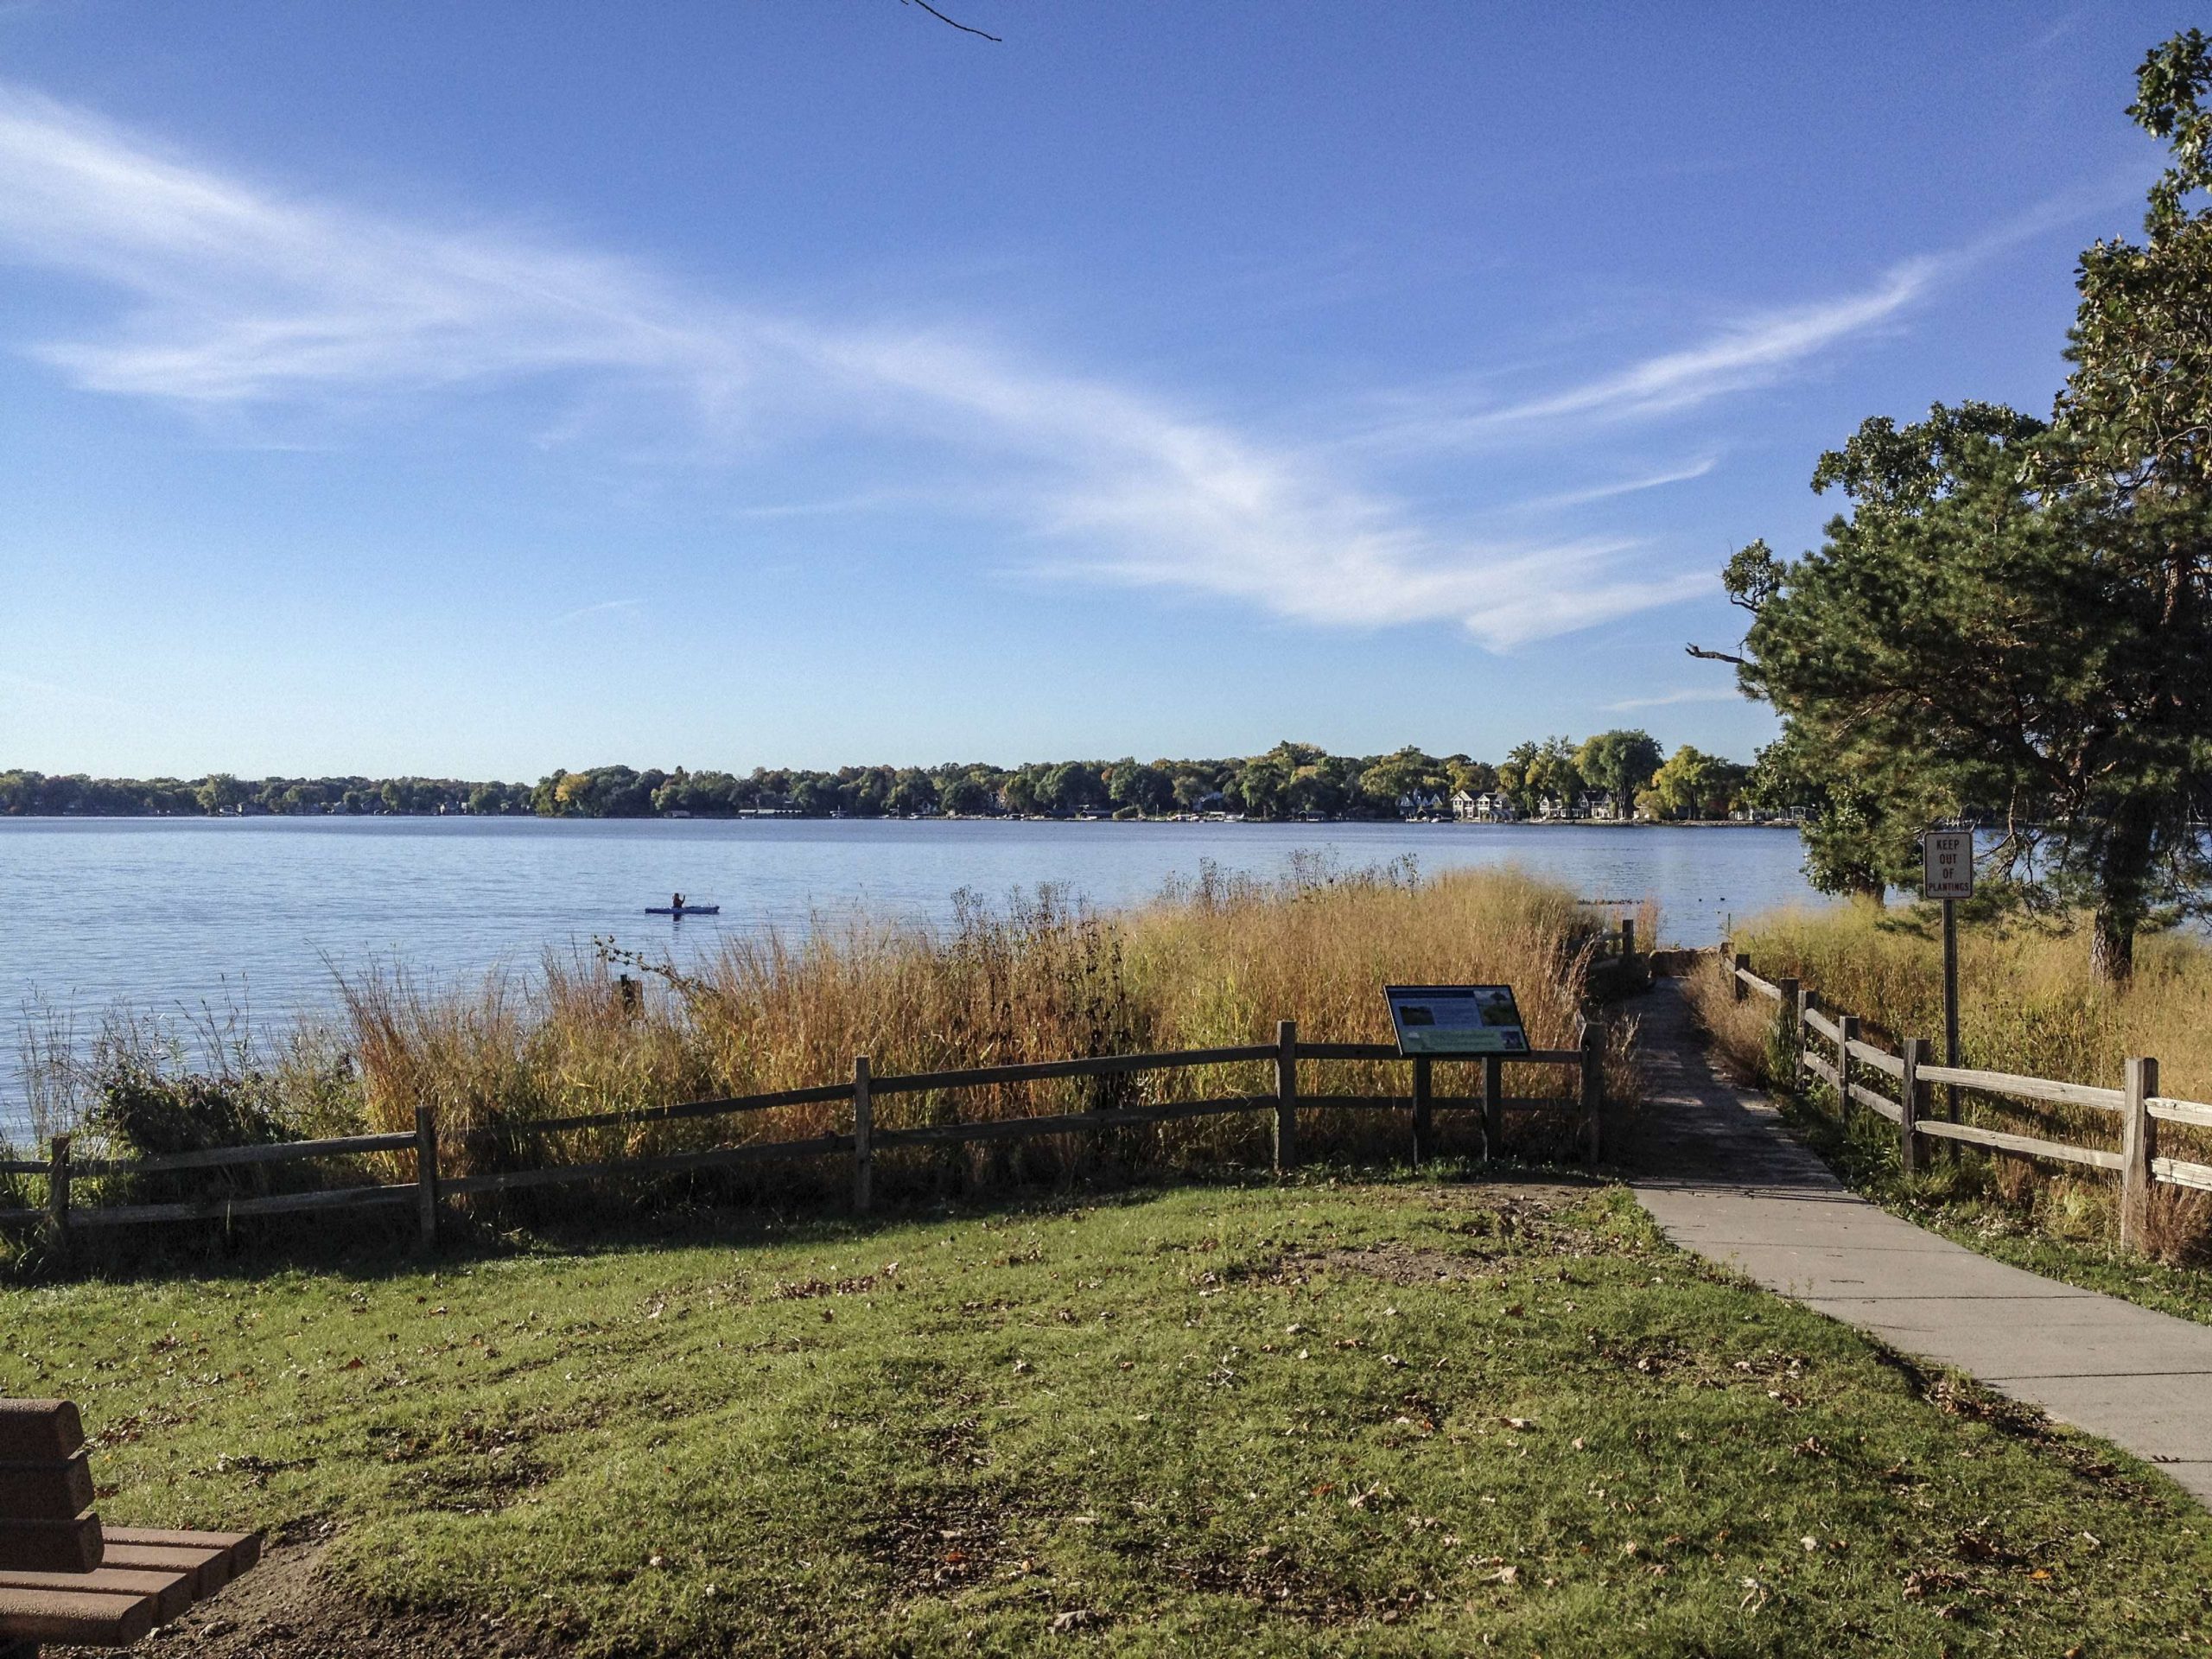 Lake Minnetonka is 14,000 acres and approximately 15 miles southwest of Minneapolis. 